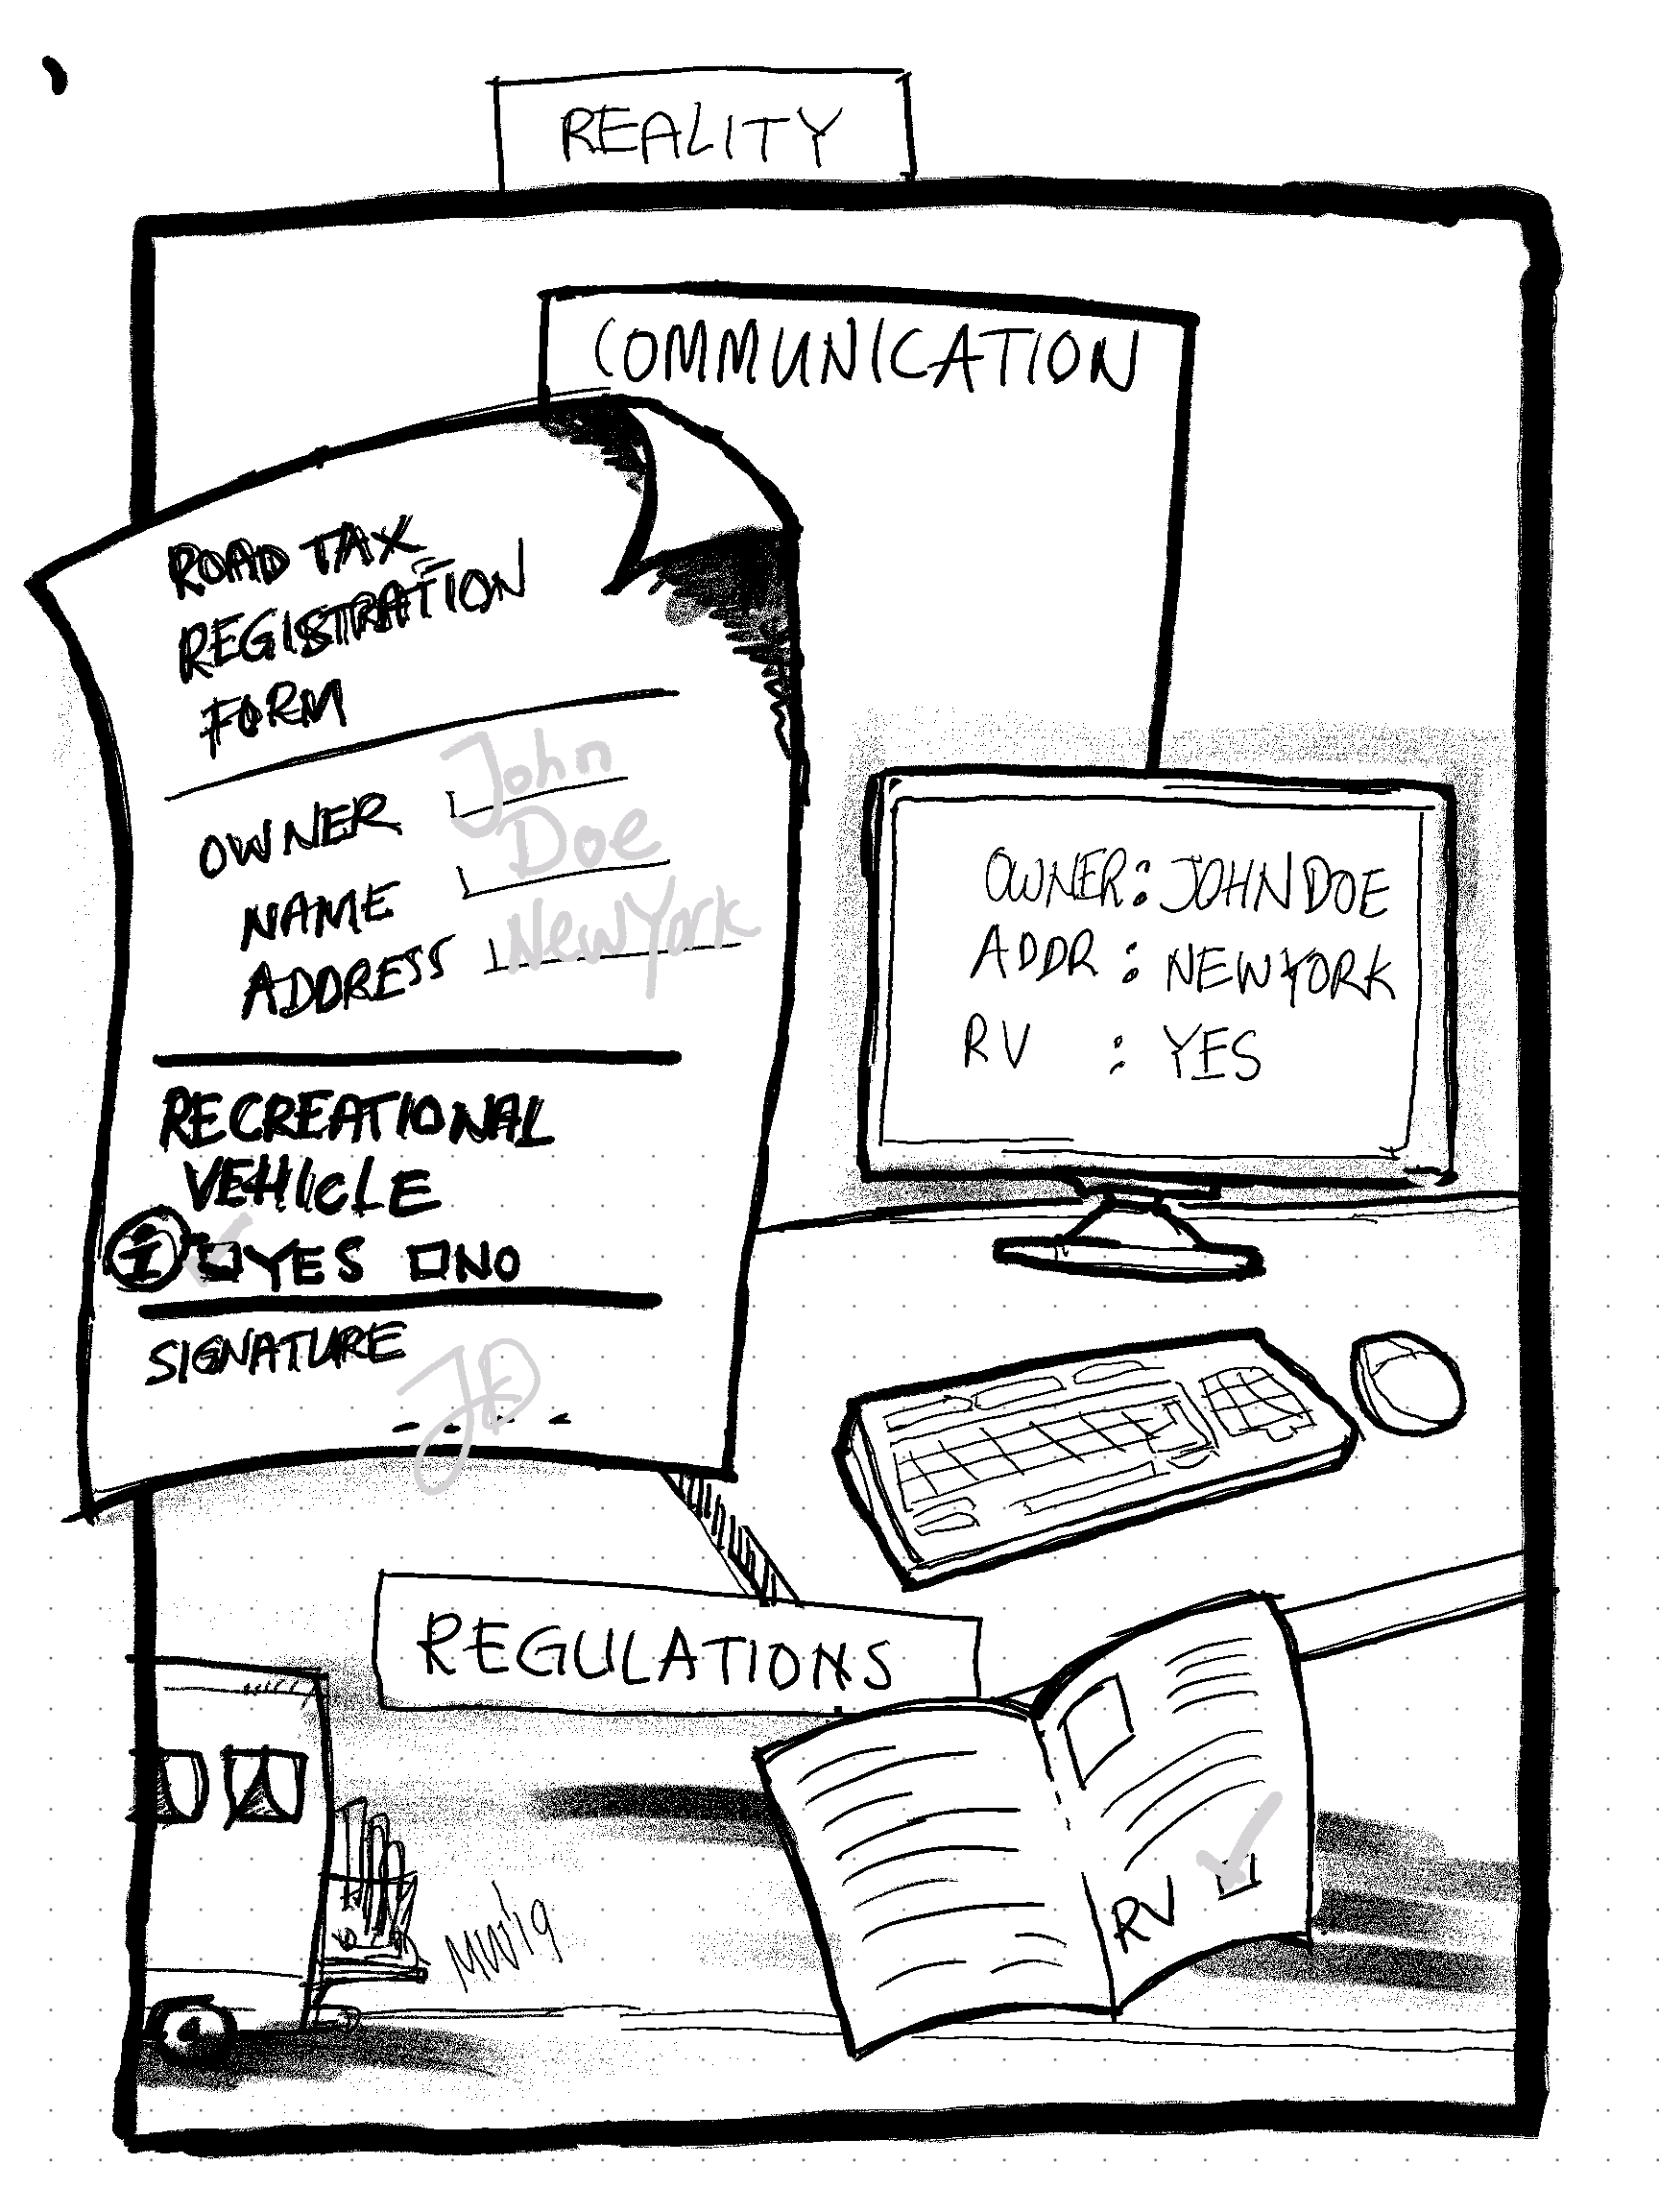 reality vs regulations vs communication 2